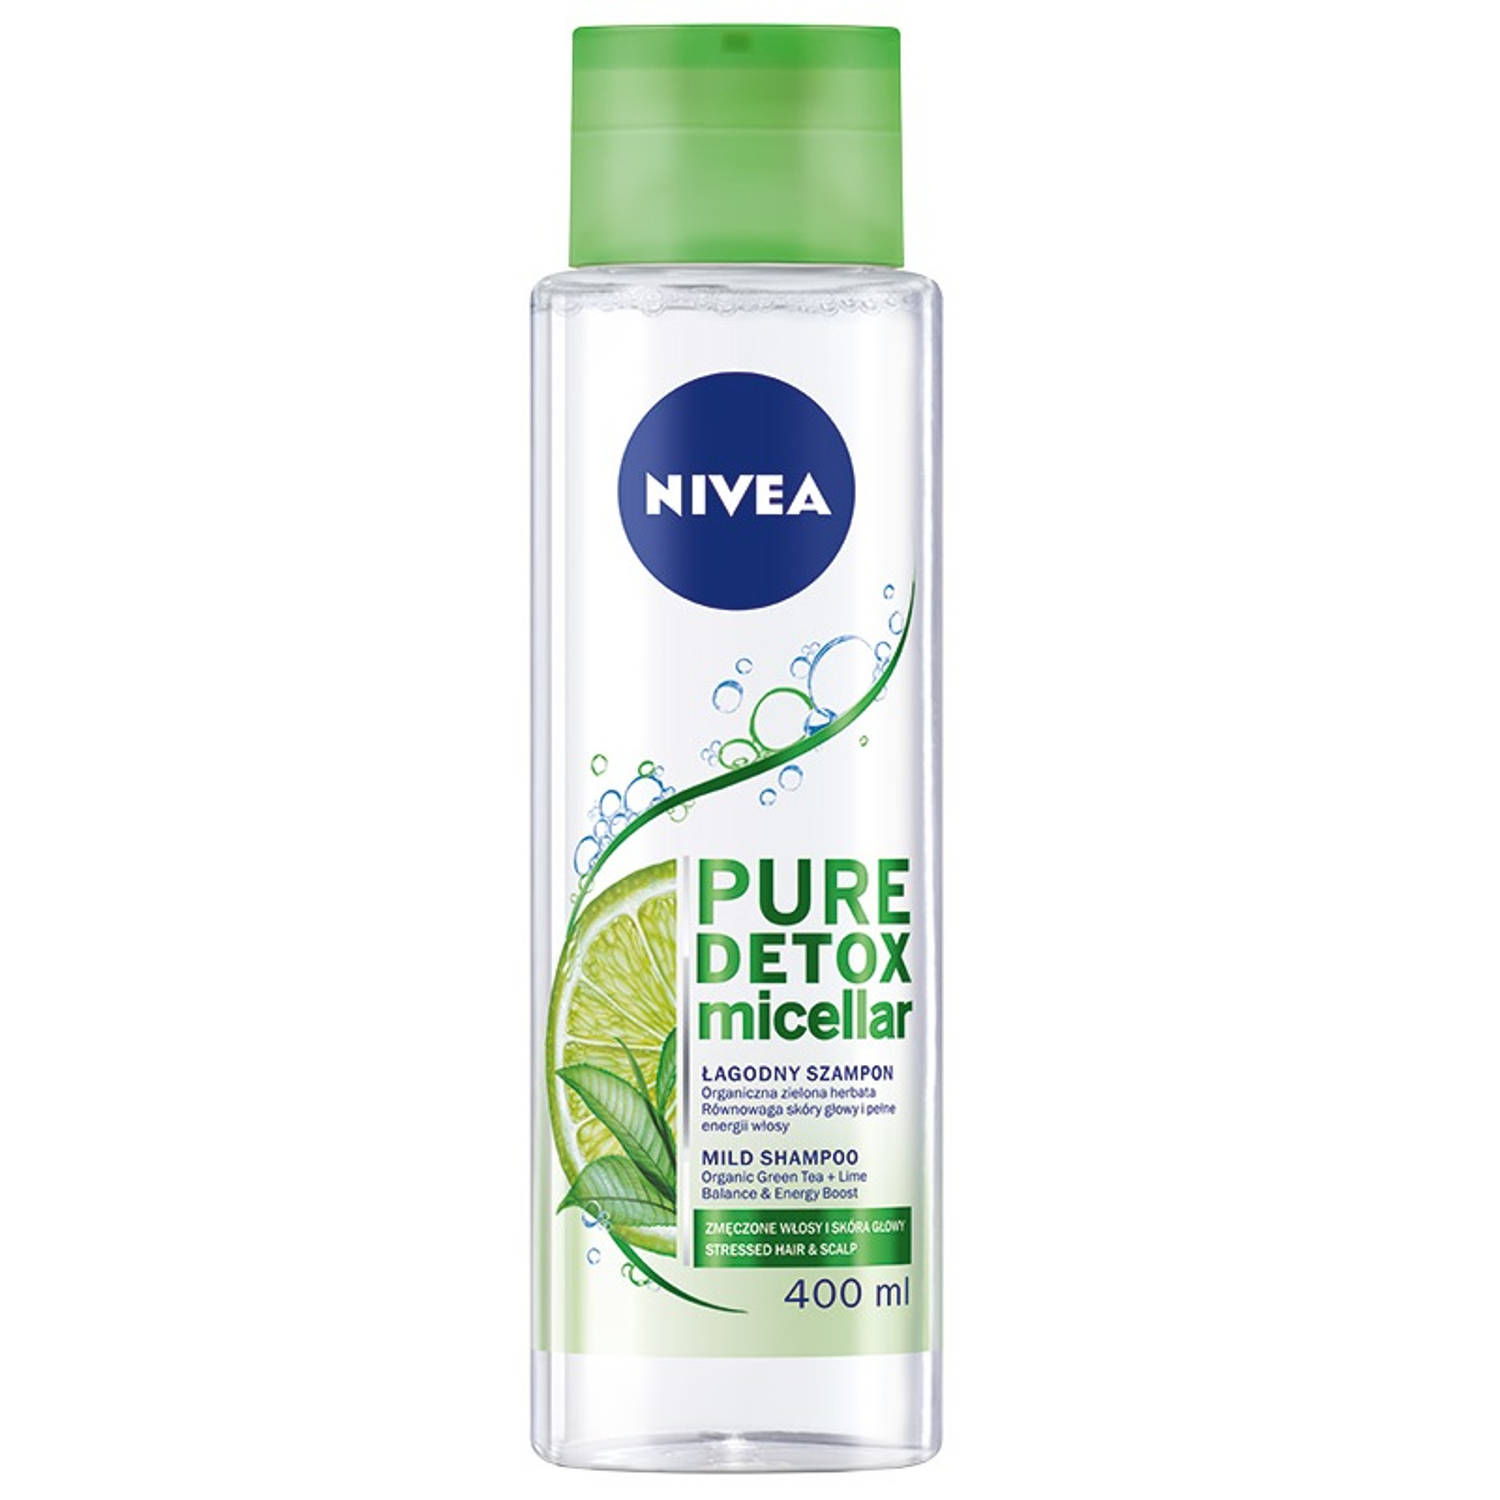 Pure Detox Micellar milde micellaire shampoo voor vermoeid haar en hoofdhuid 400ml